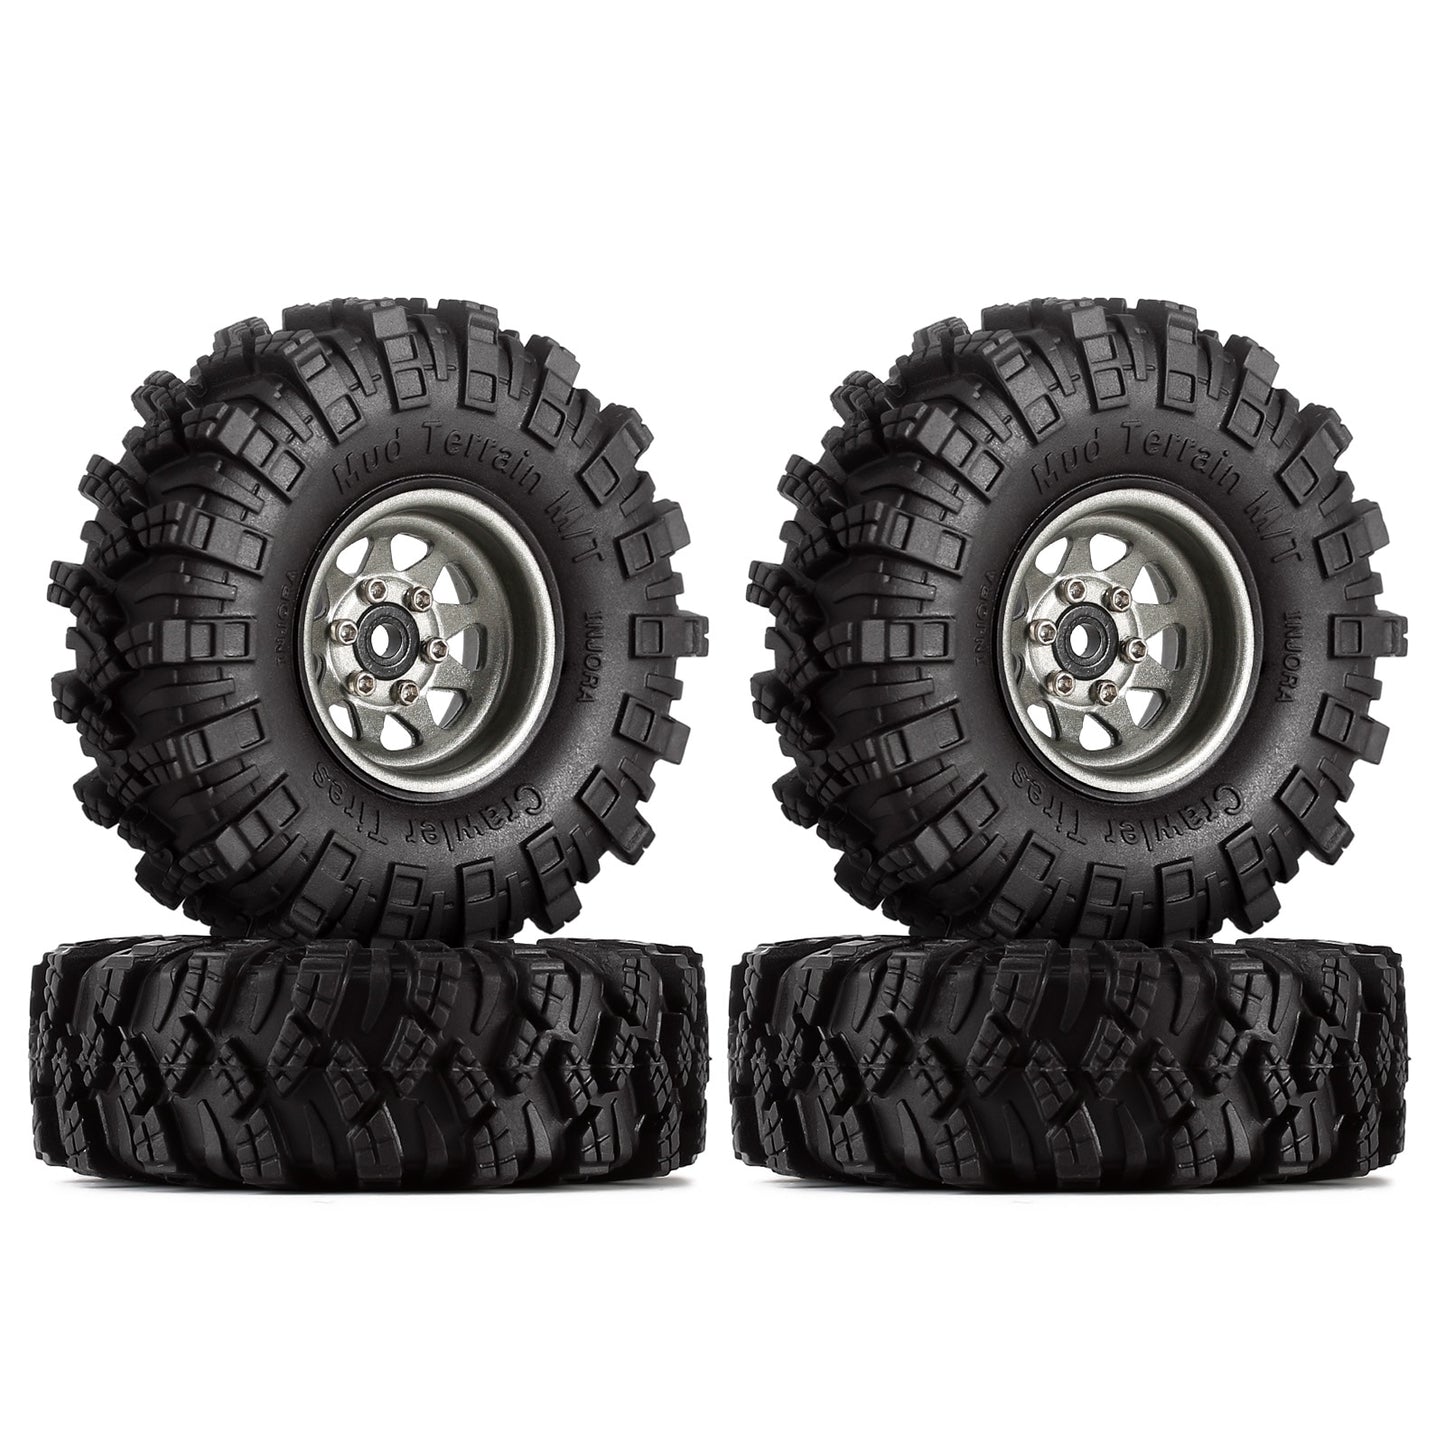 INJORA 1.0 Beadlock Wheel Mud Tires Set Deep Dish Negative Offset 3.78mm For RC Crawler Car Axial SCX24 Enduro24 (W1004-T1007)